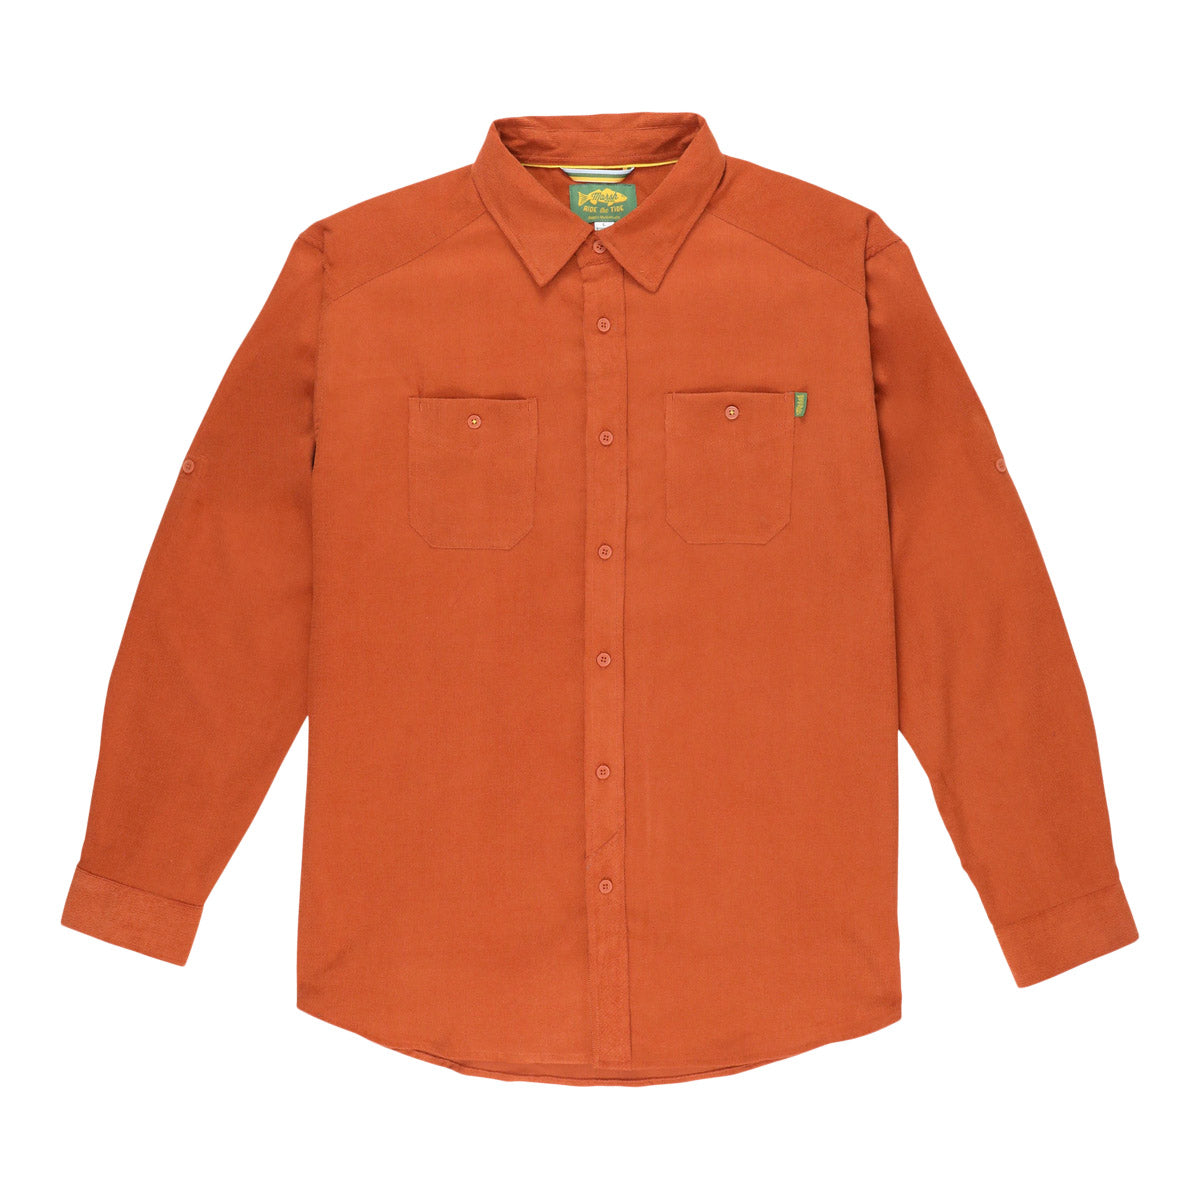 Marsh Wear Cordy Long Sleeve Shirt